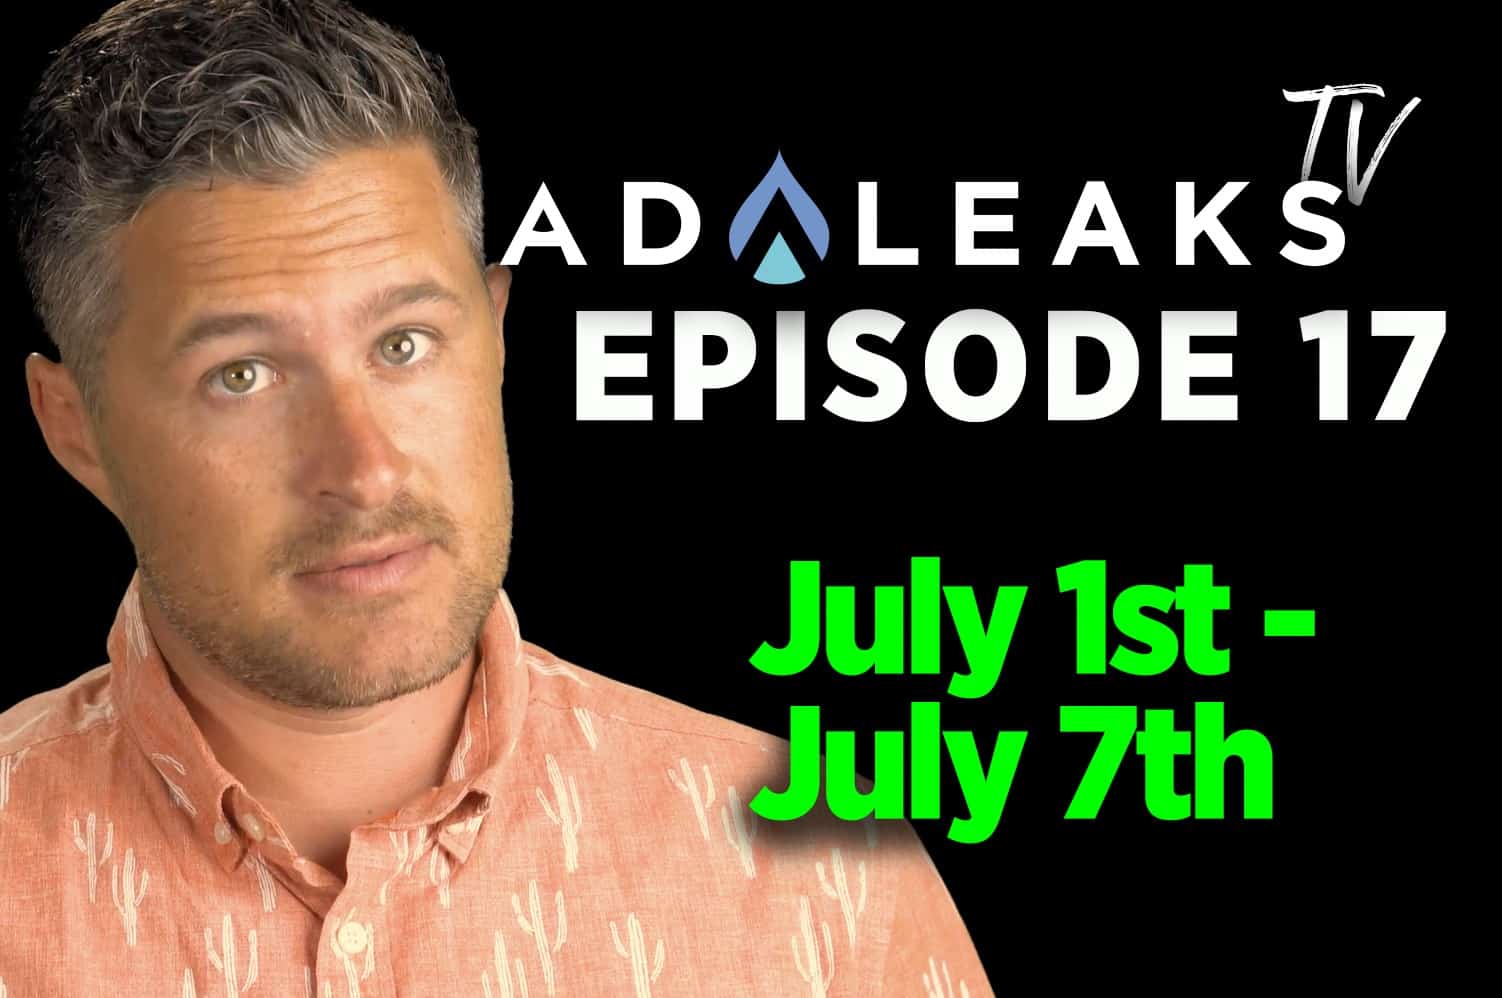 adleaks tv episode 17 featured